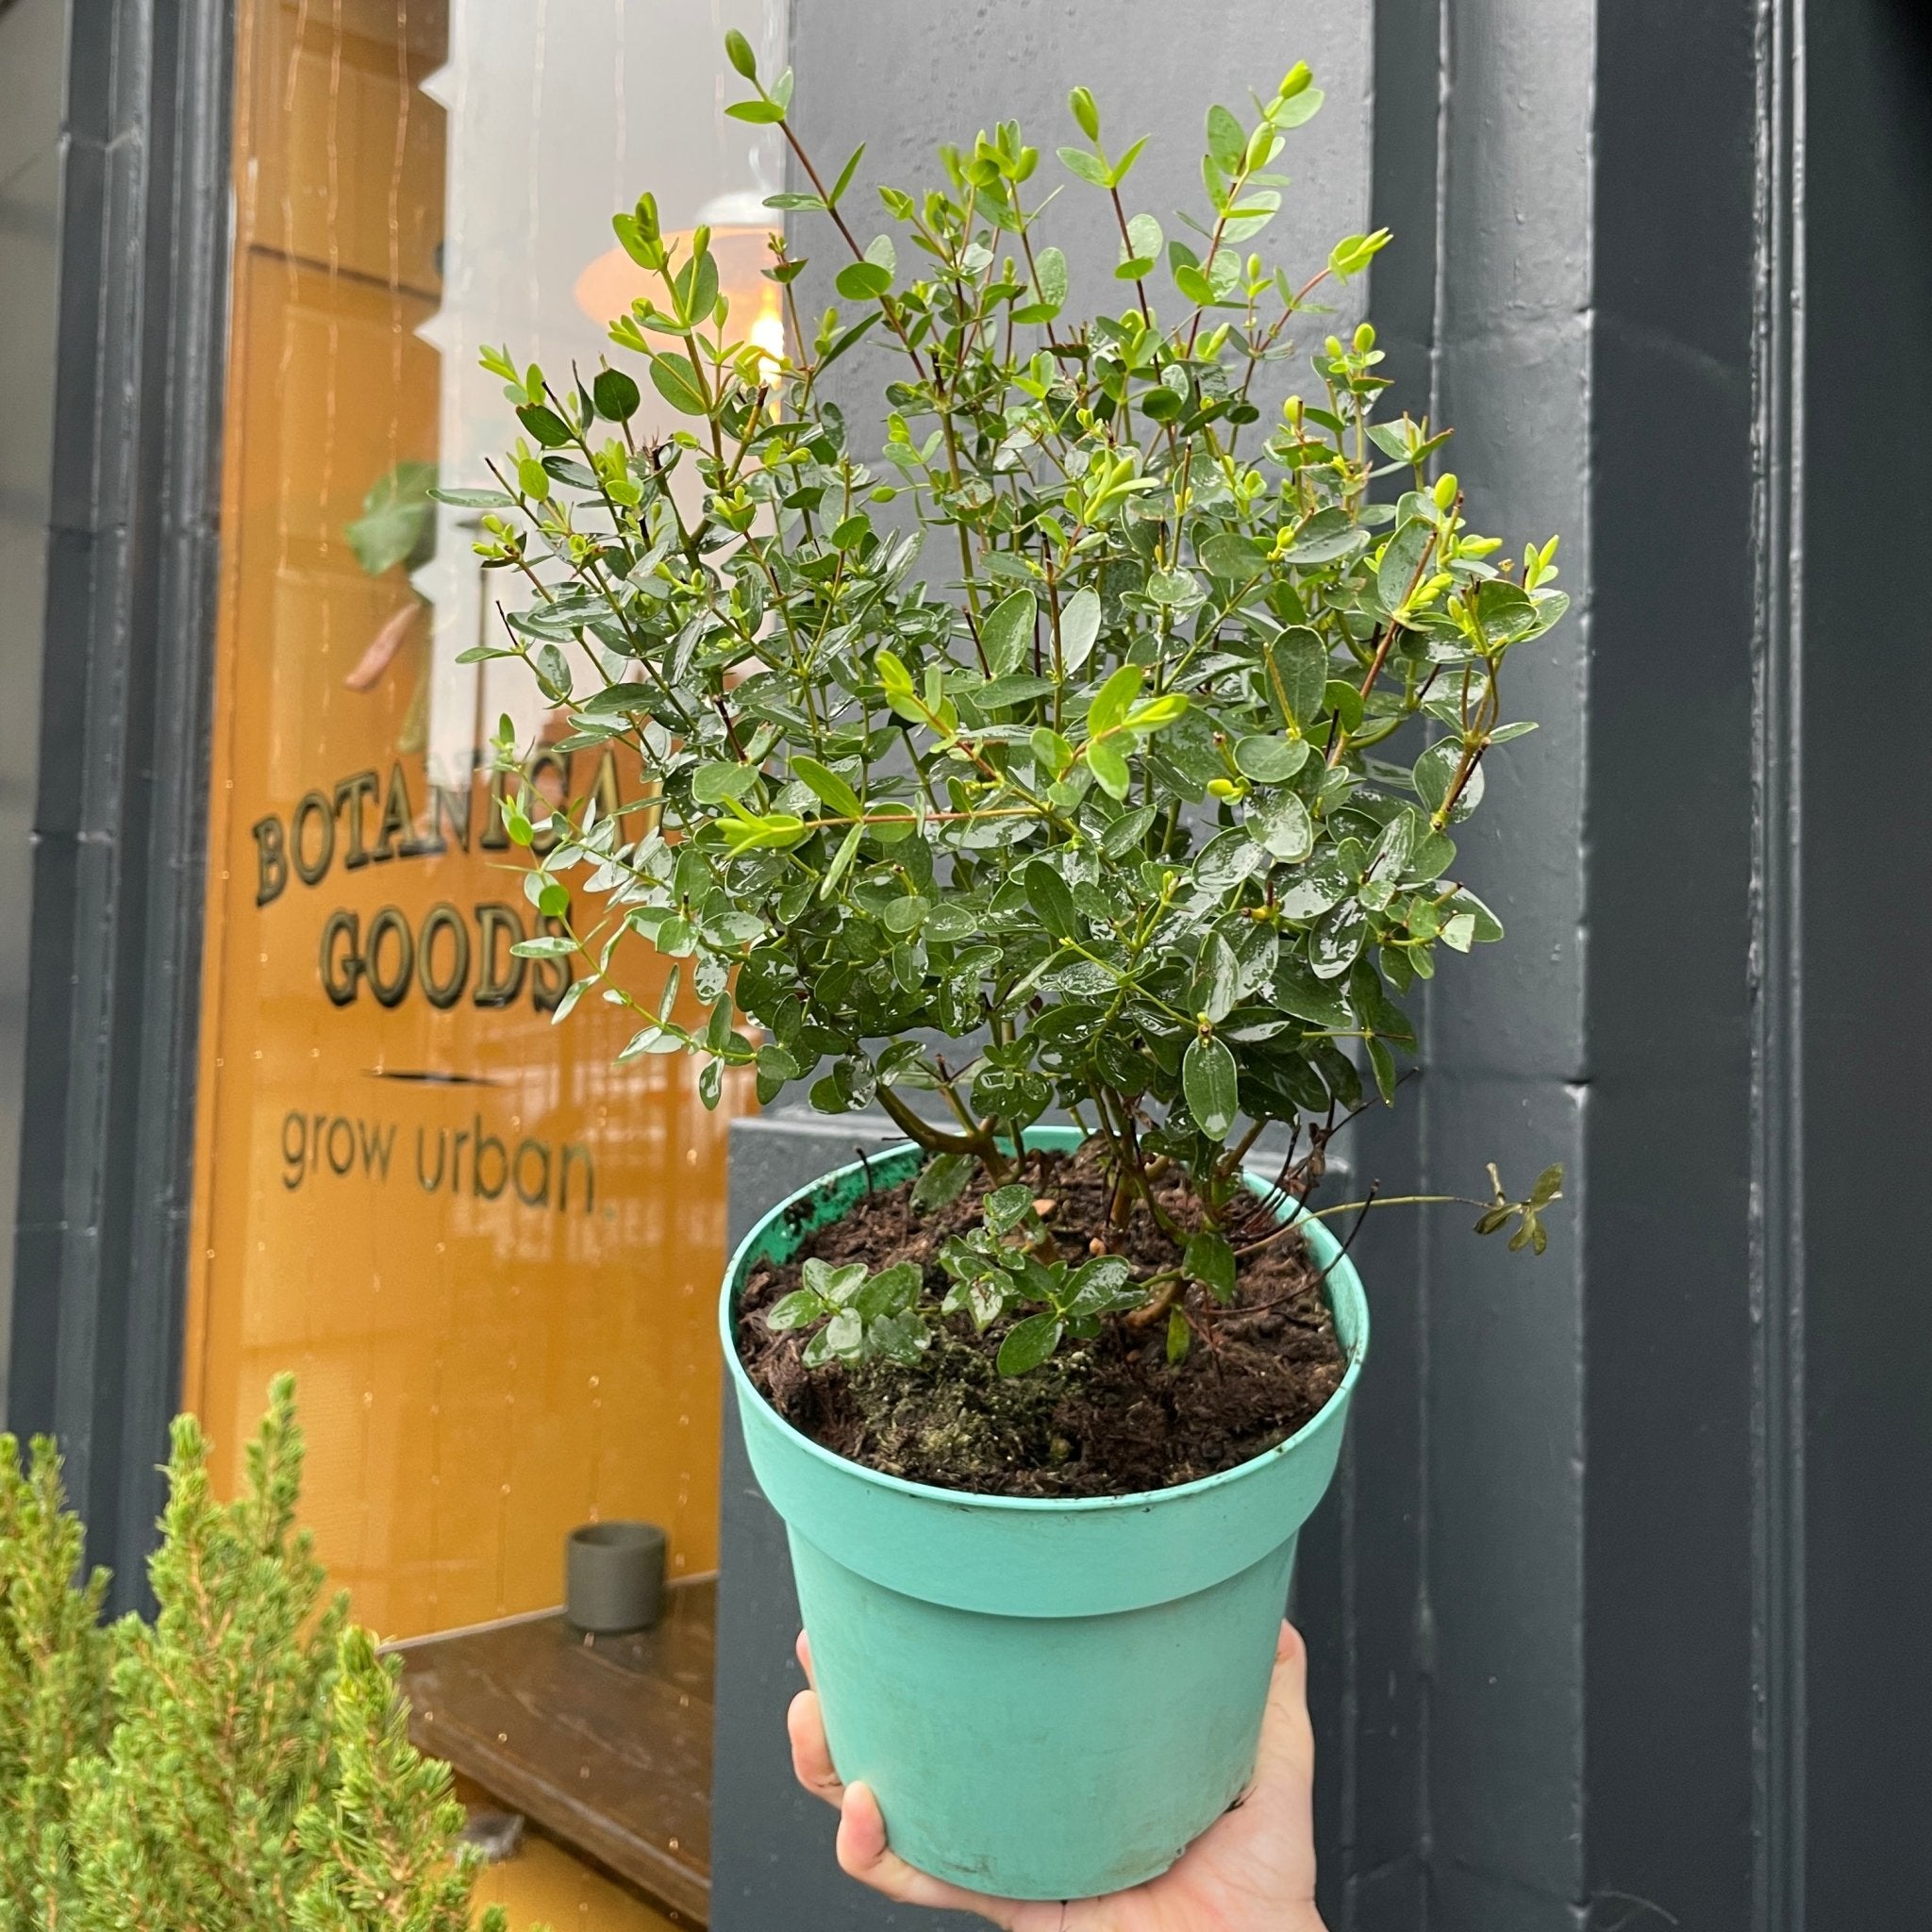 Eucalyptus parvifolia - grow urban. UK